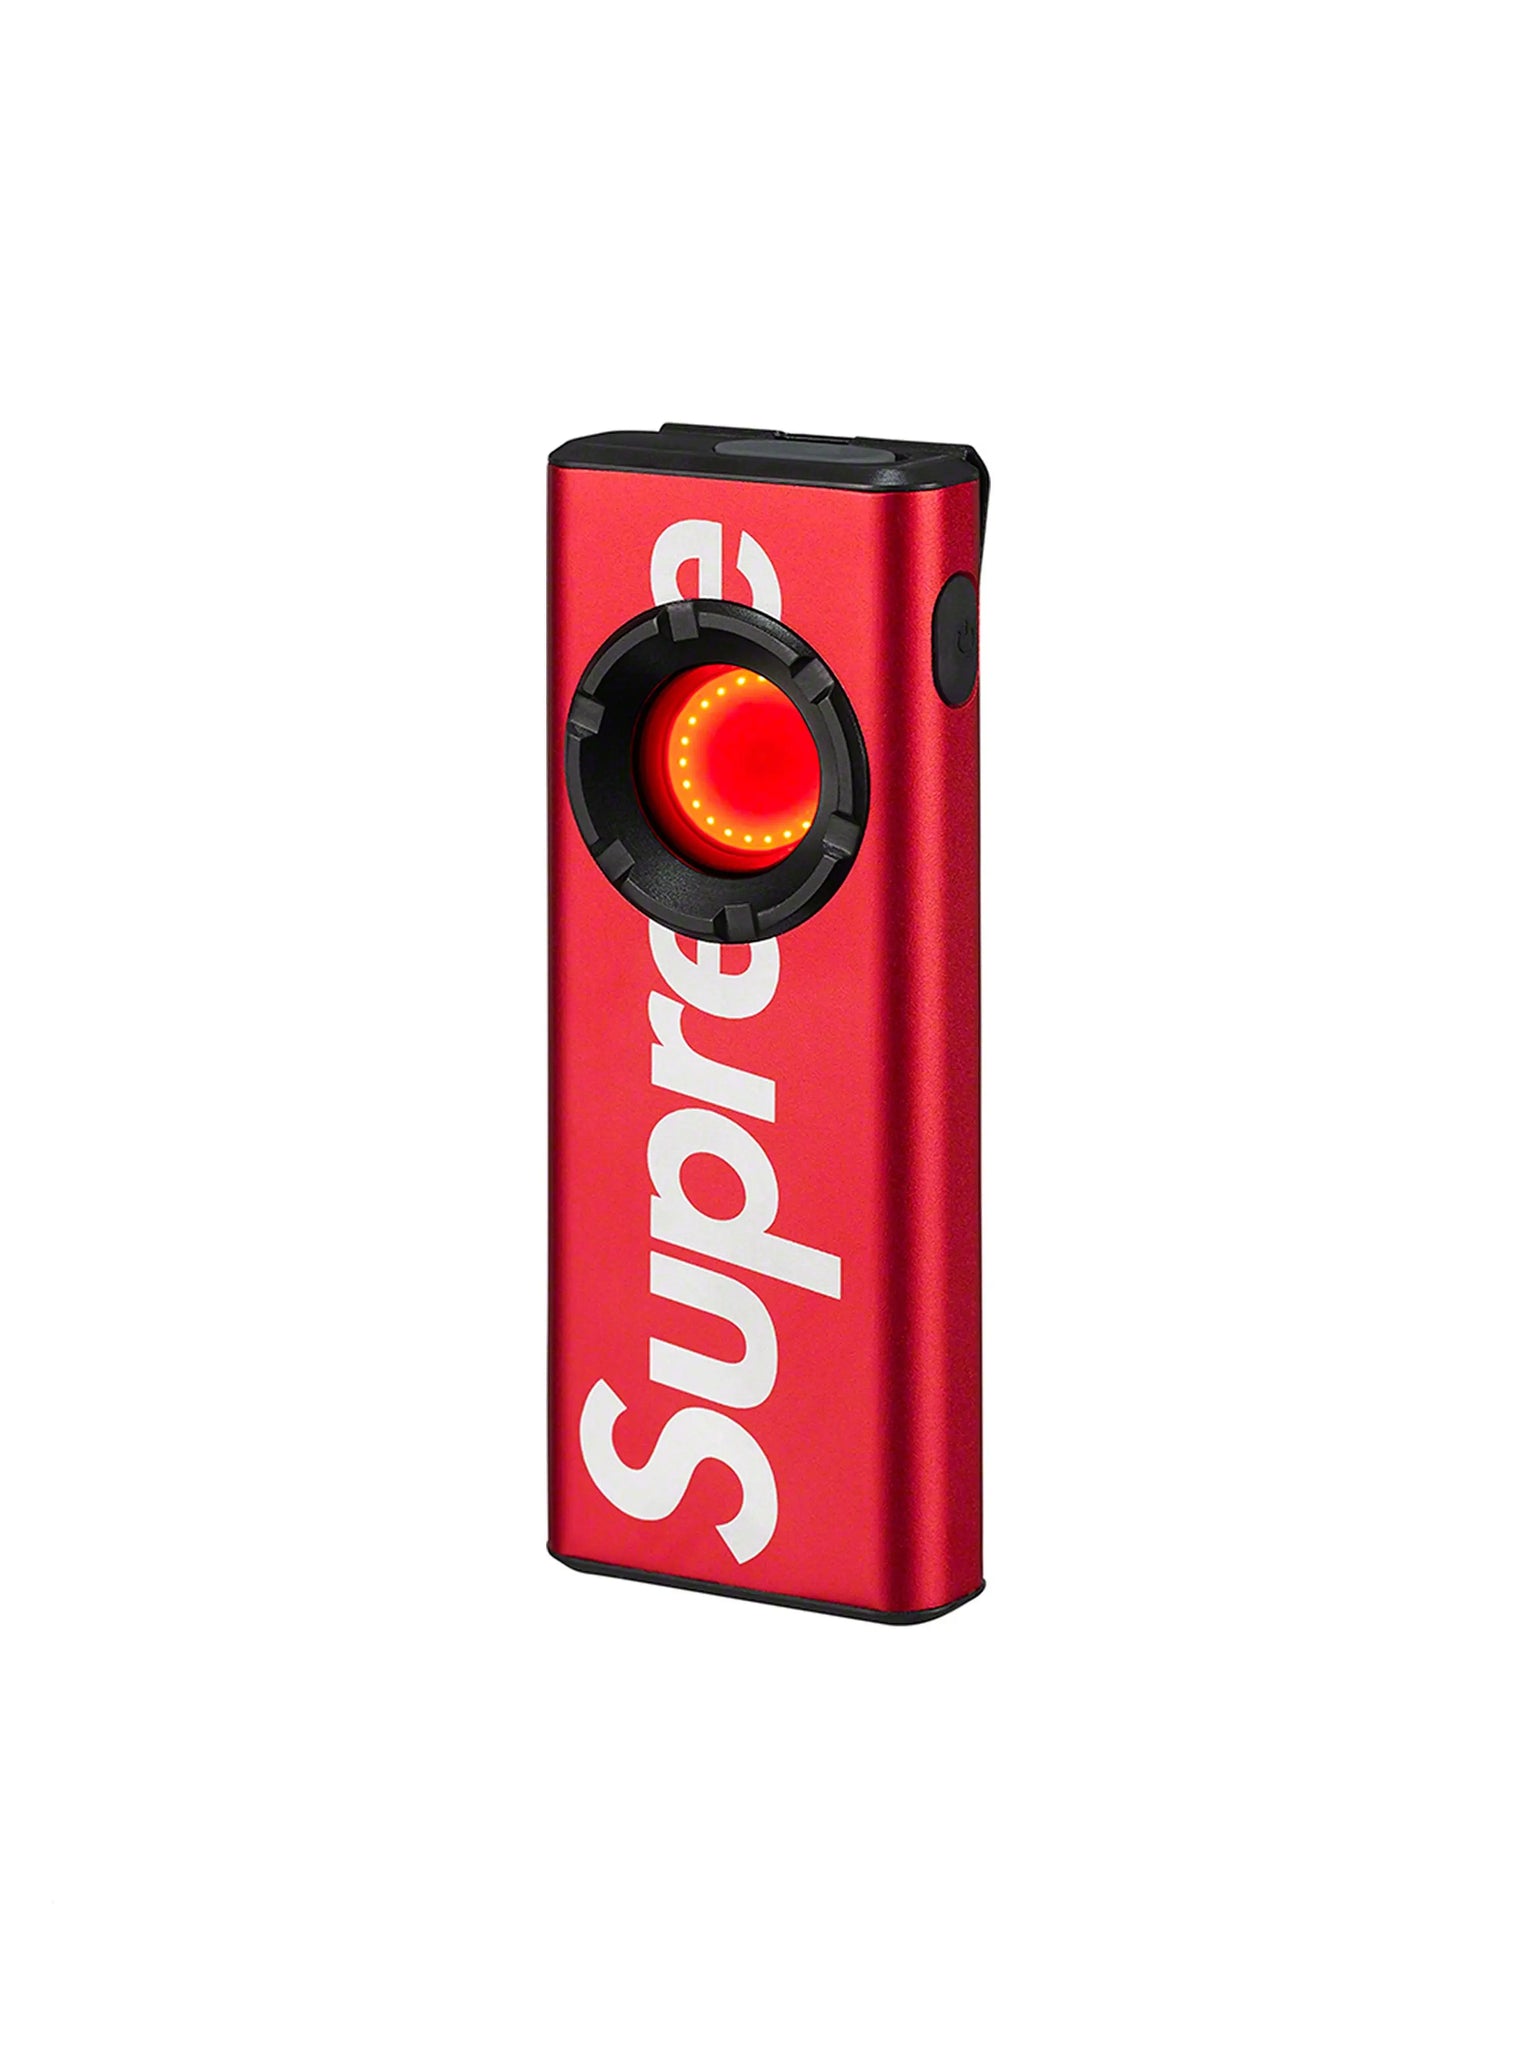 Supreme Nebo Slim 1200 Pocket Light Red in Auckland, New Zealand - Shop name